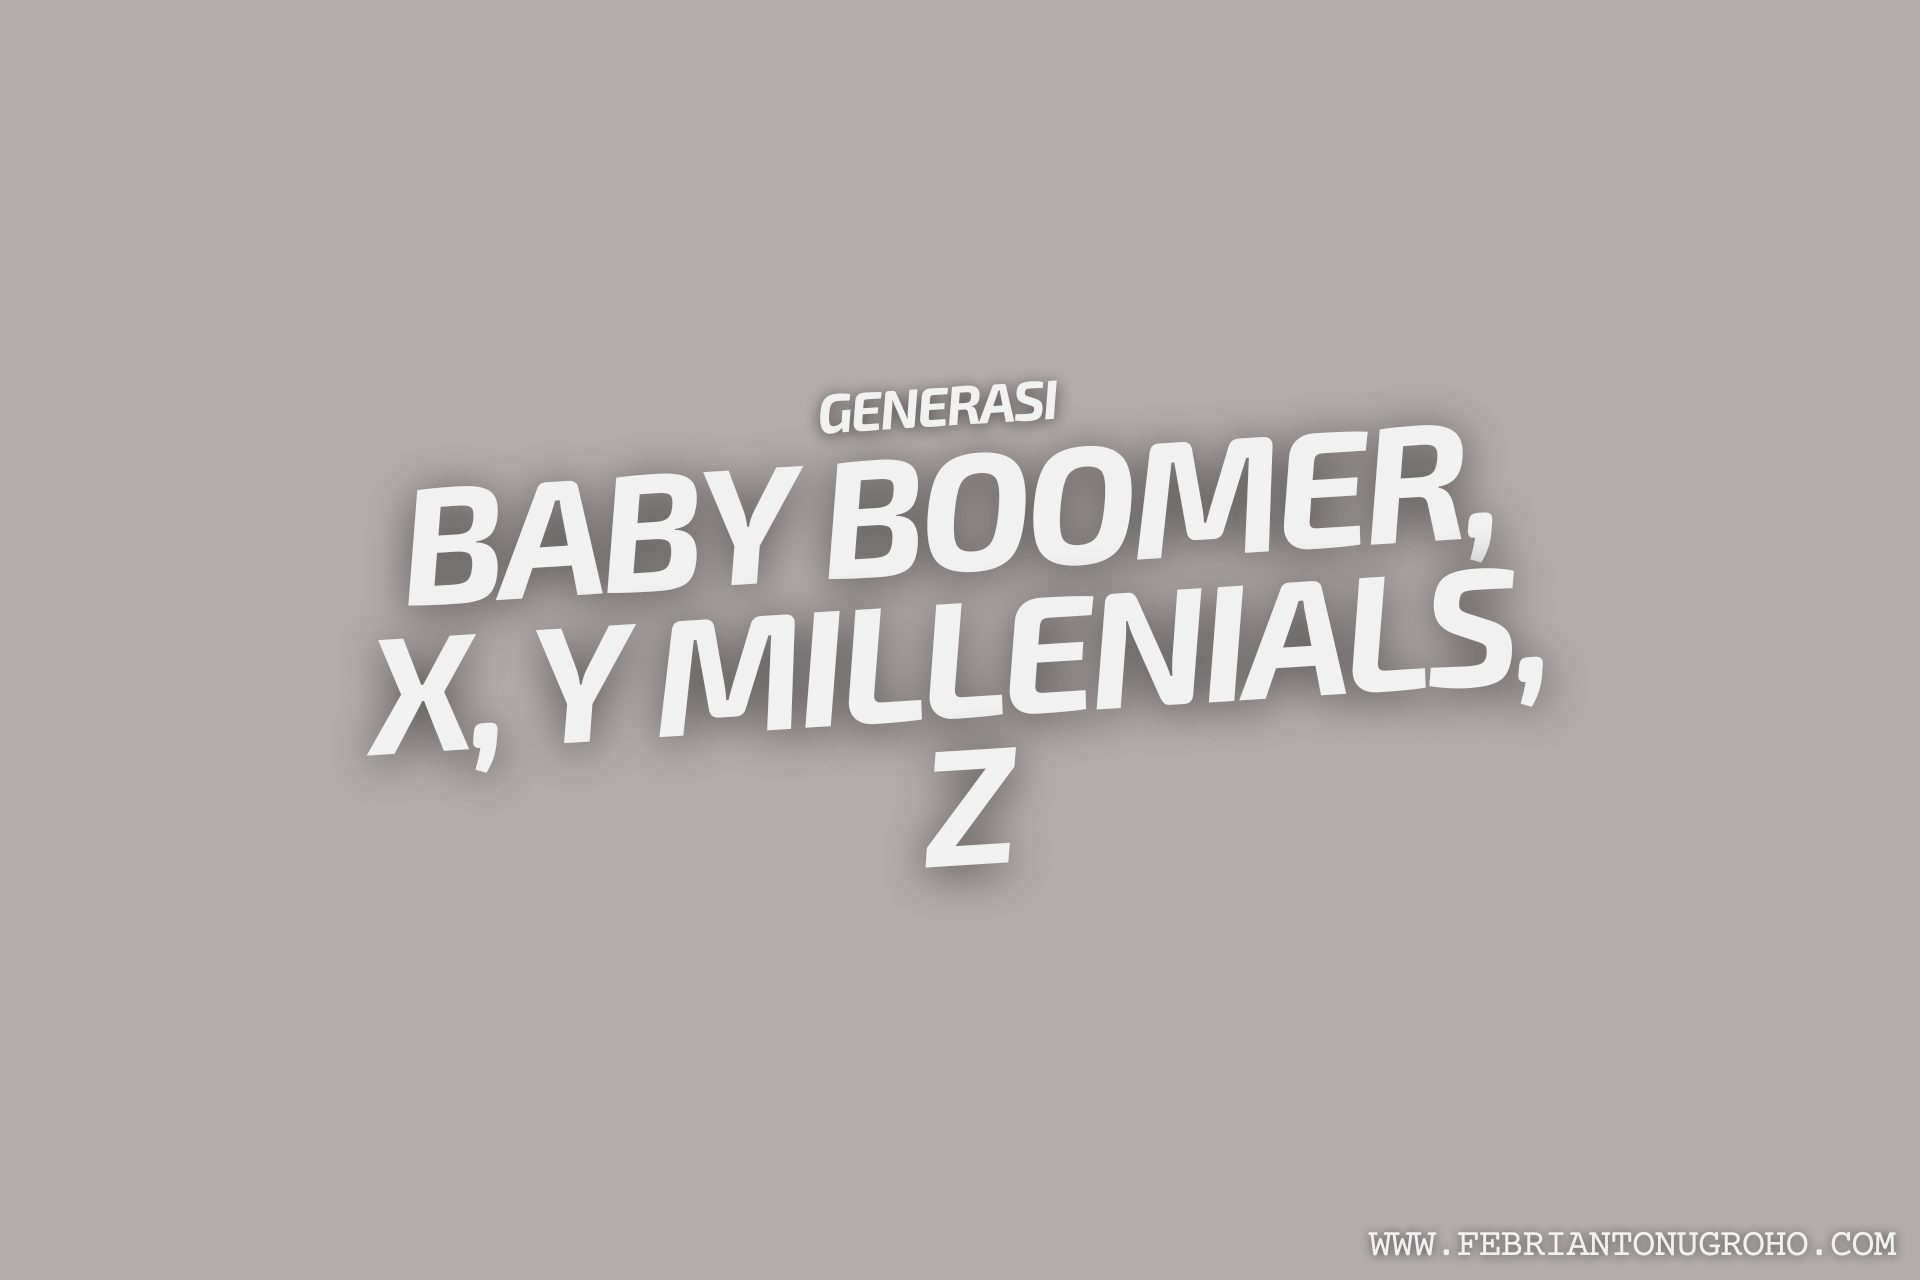 Apa Itu Generasi Baby Boomer, X, Y, Z